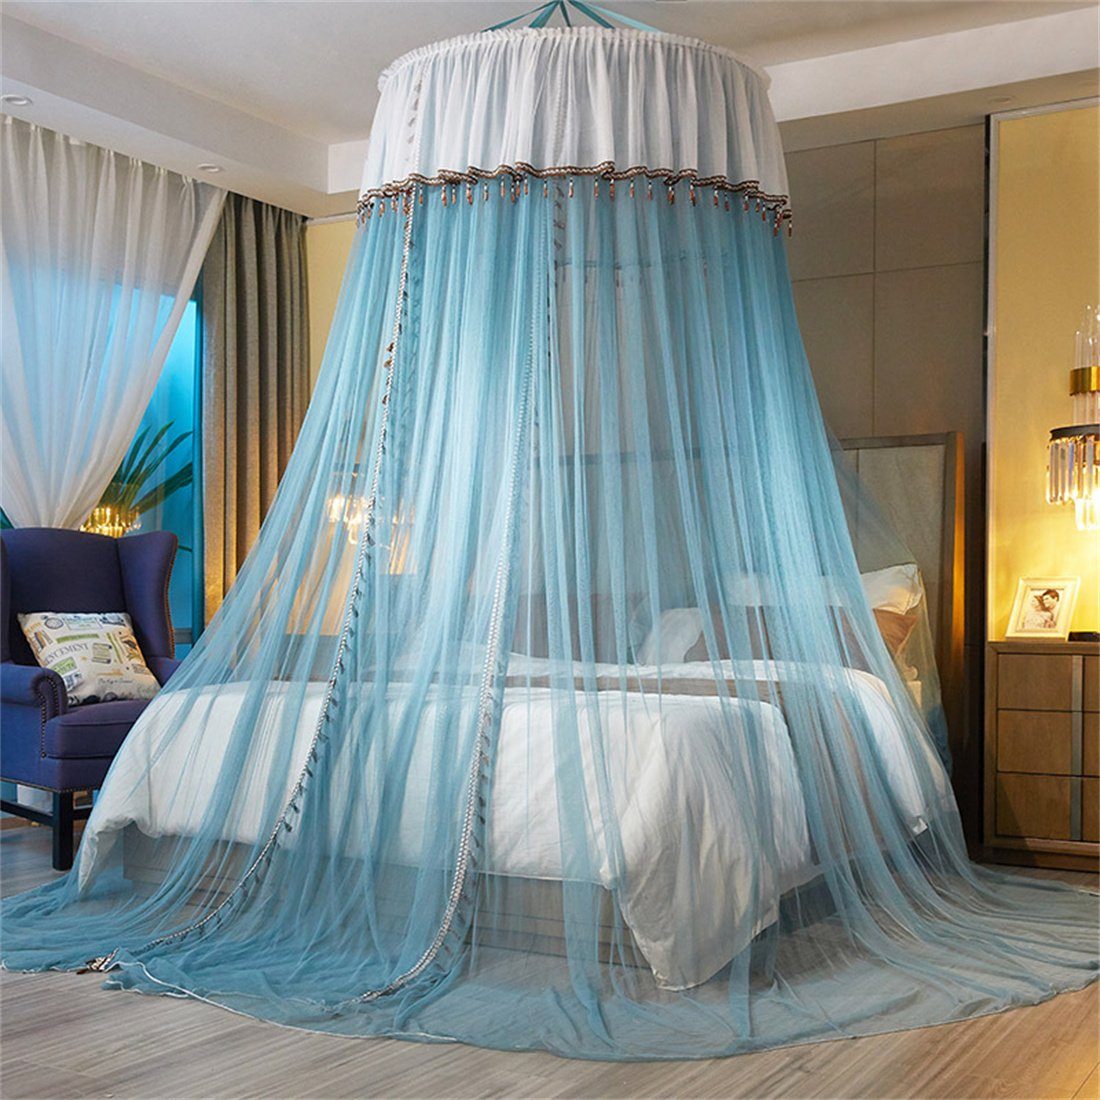 Stil Bettdecke Bett Prinzessin Kuppel ZAXSD blau Vorhang Betthimmel Moskitonetz,Anti-Moskito